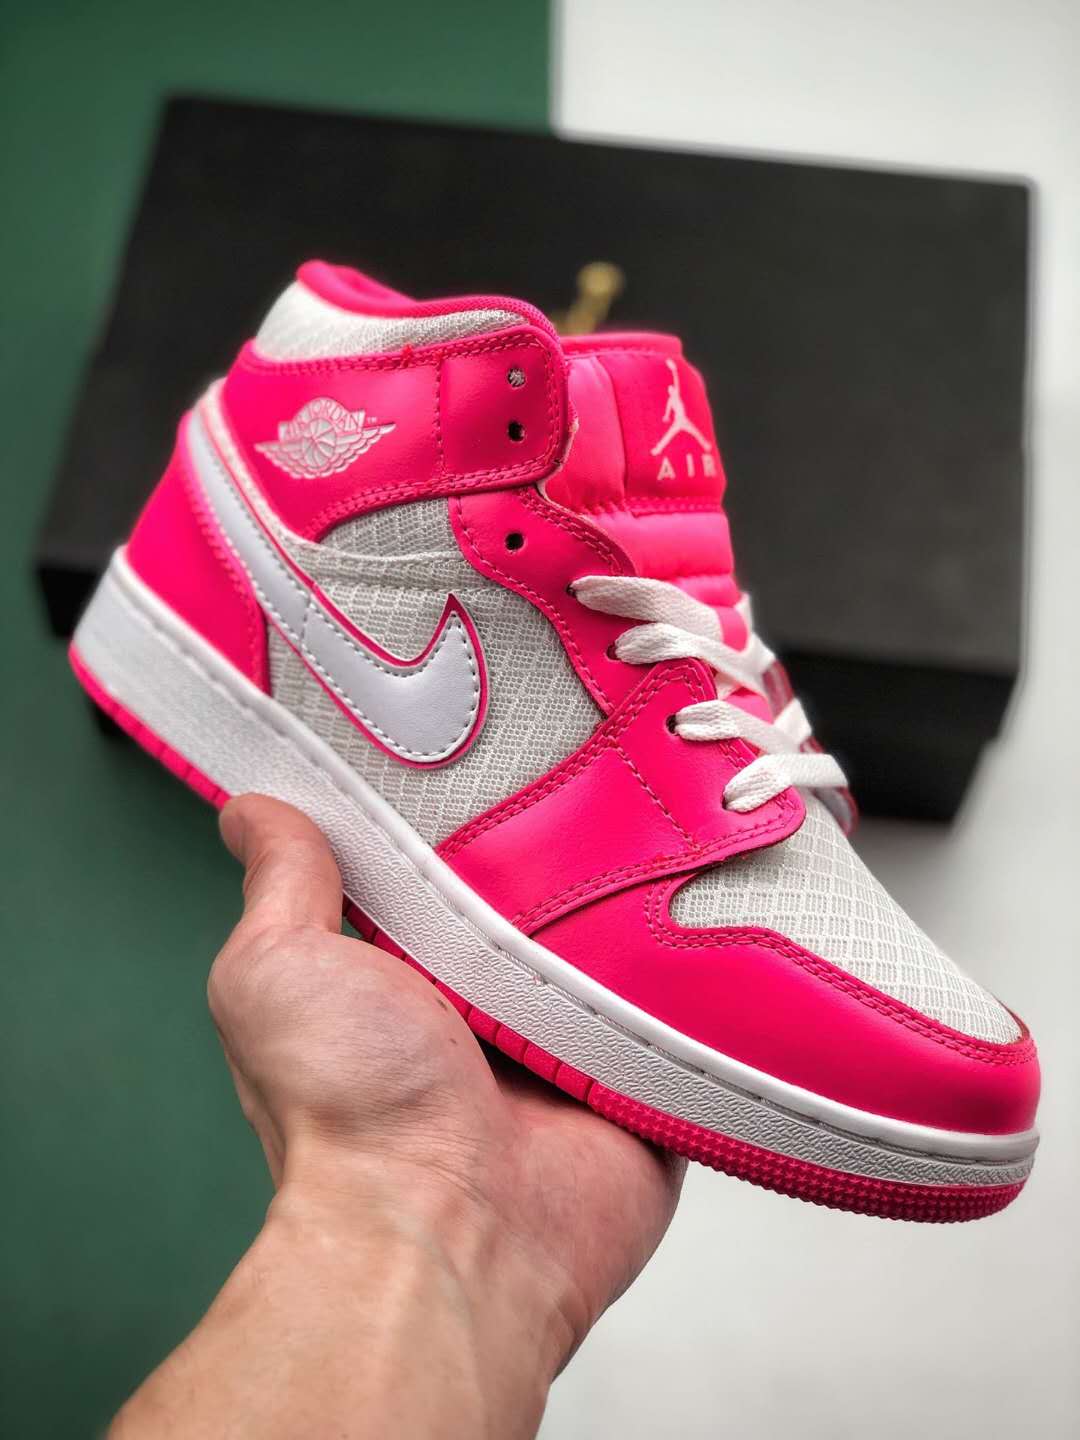 Air Jordan 1 Mid 'Hyper Pink' 555112-611 - Latest Release for Sneakerheads